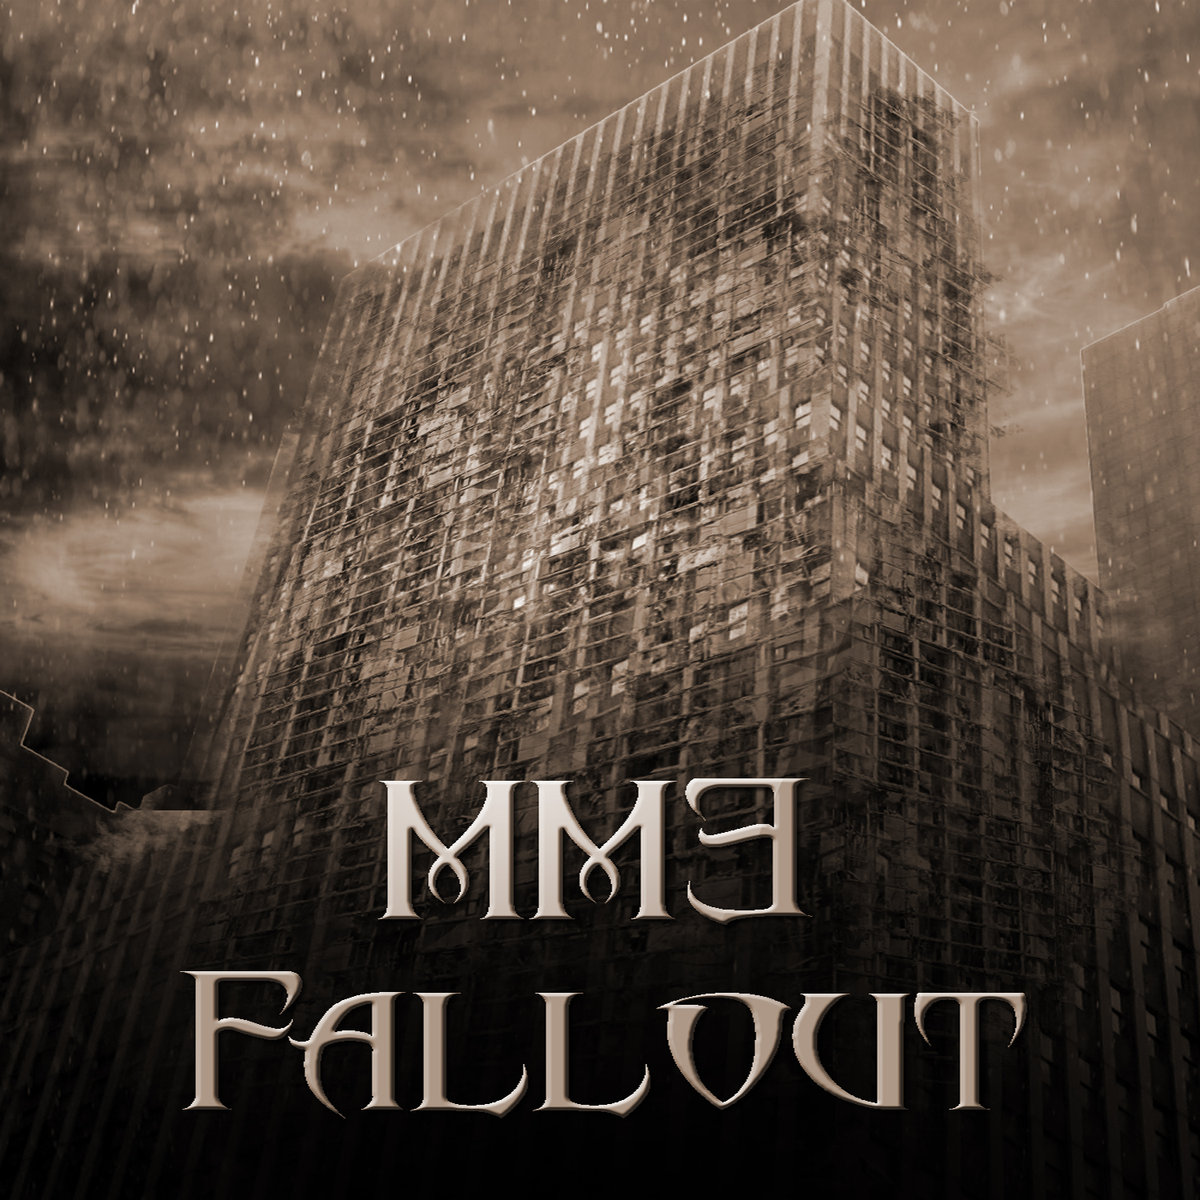  MM3 – Fallout